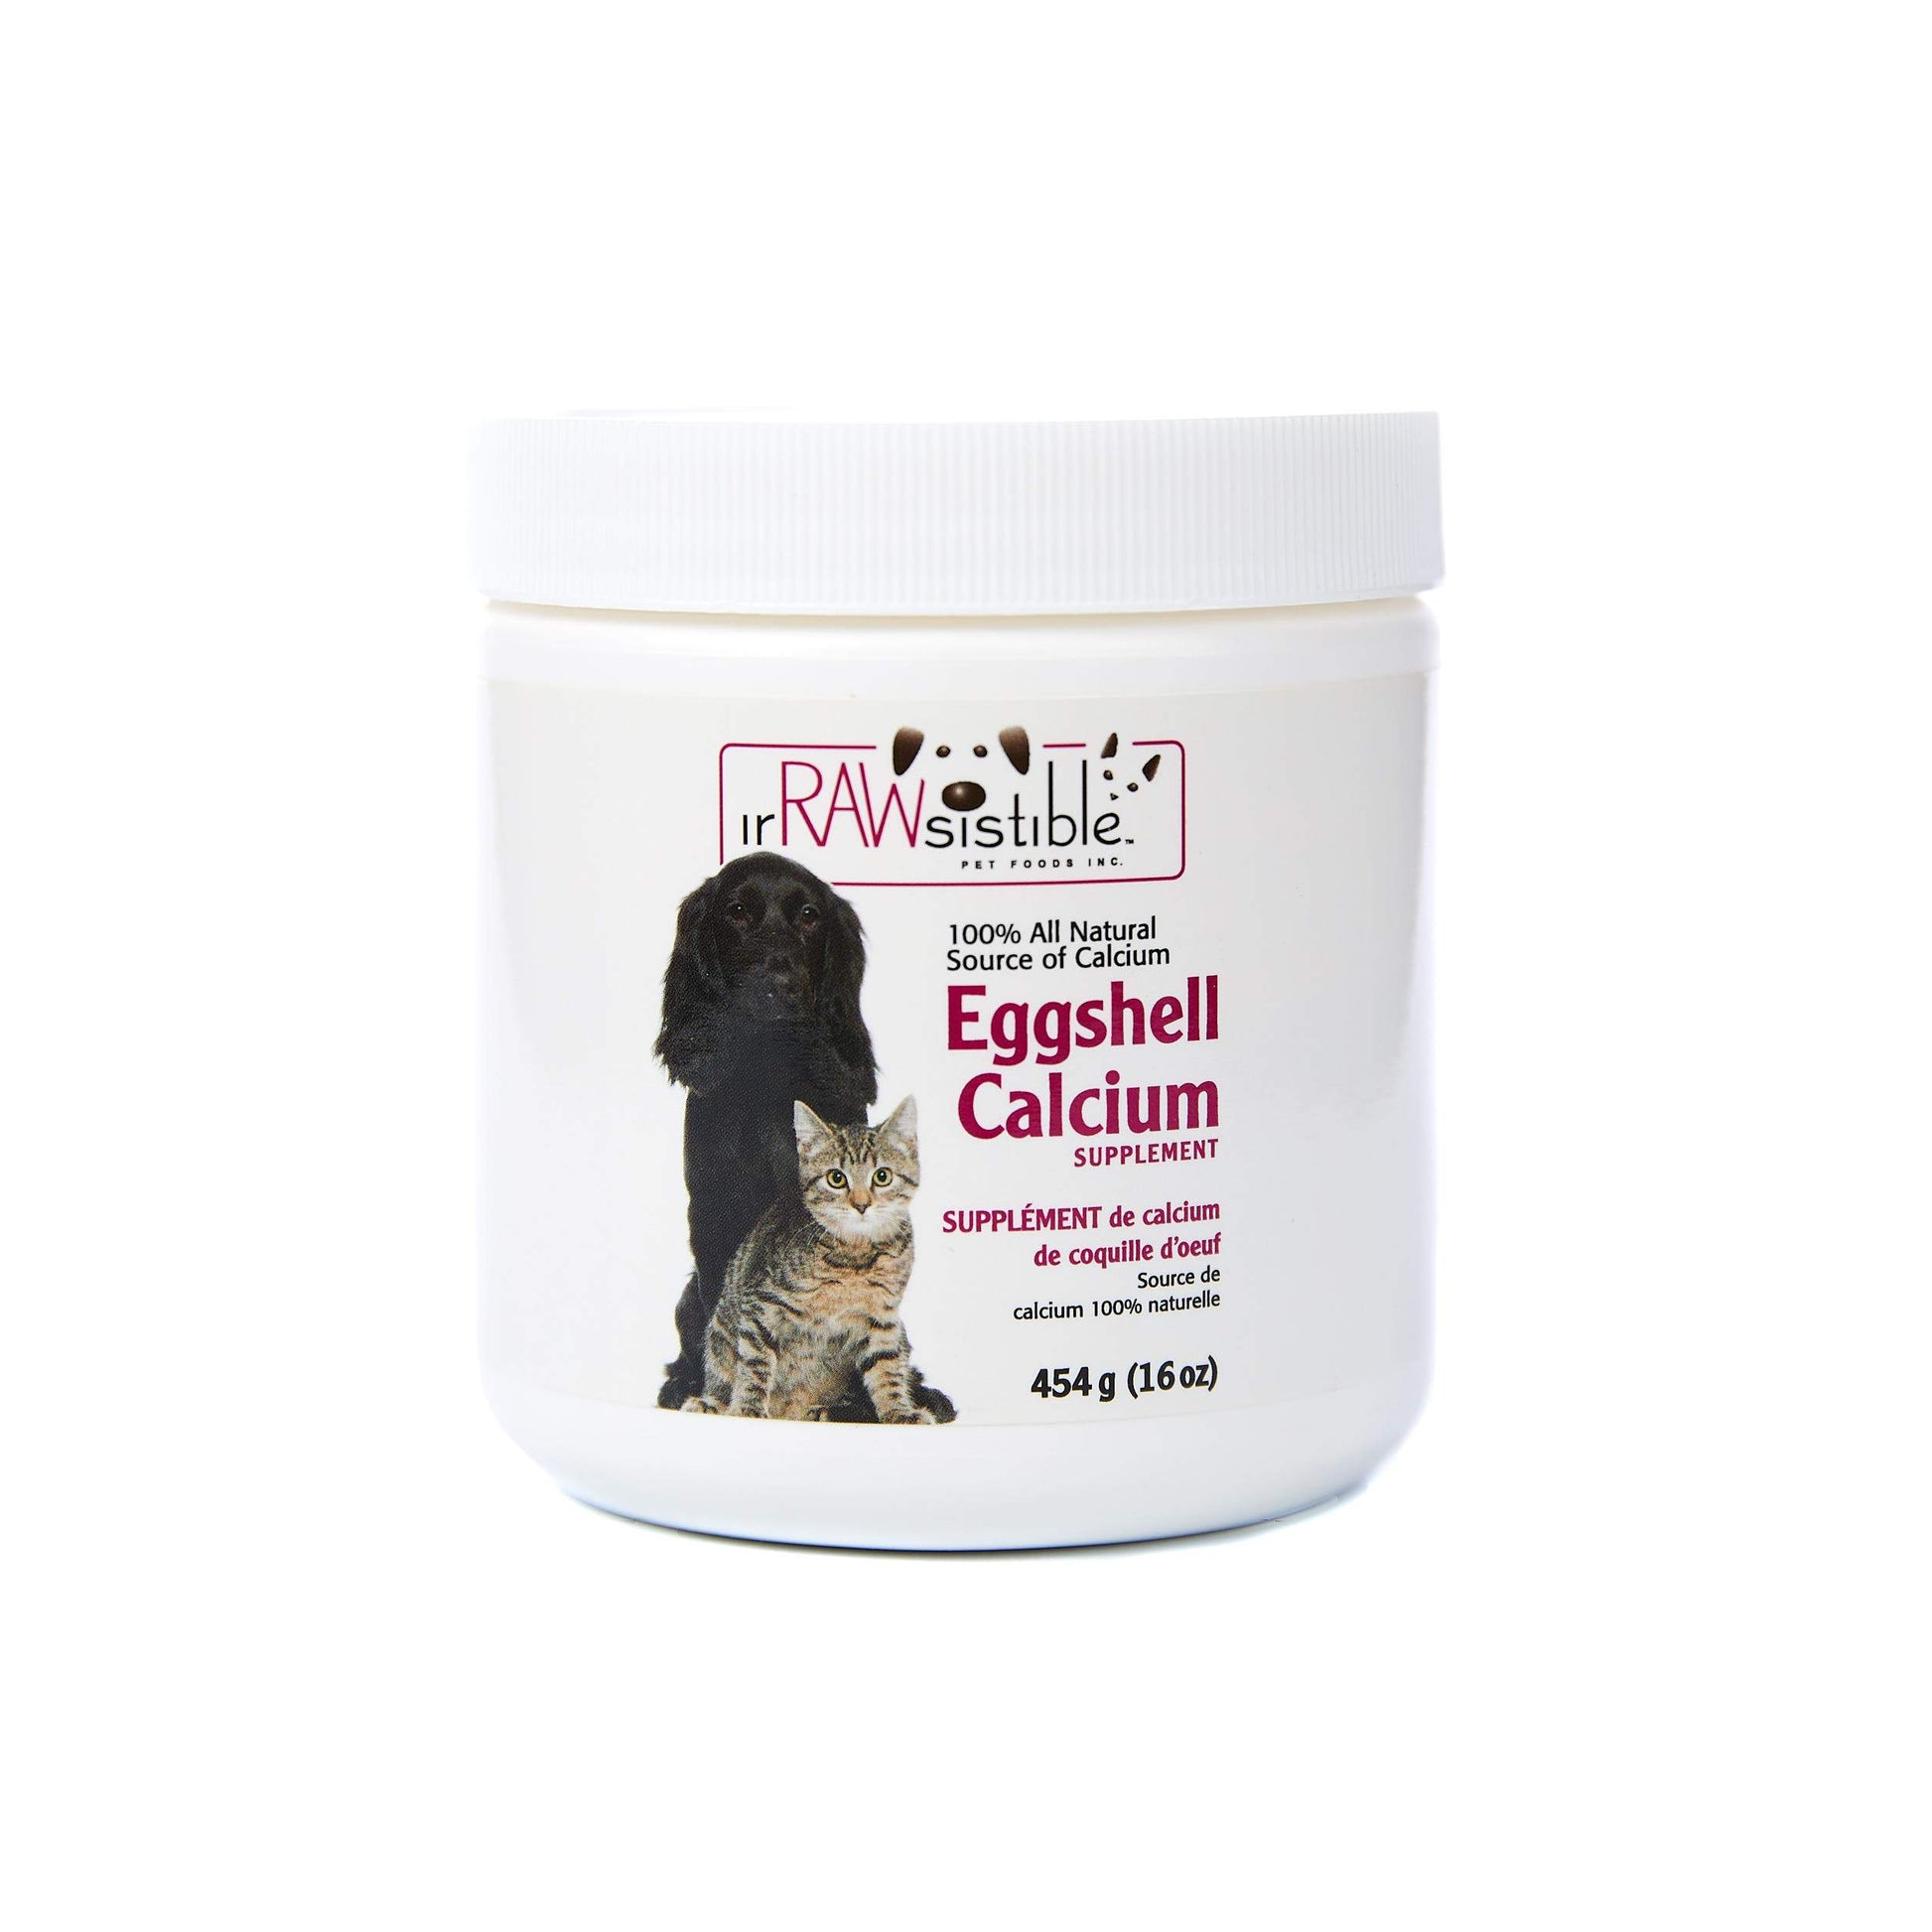 IrRAWsisitible Eggshell Calcium Supplement